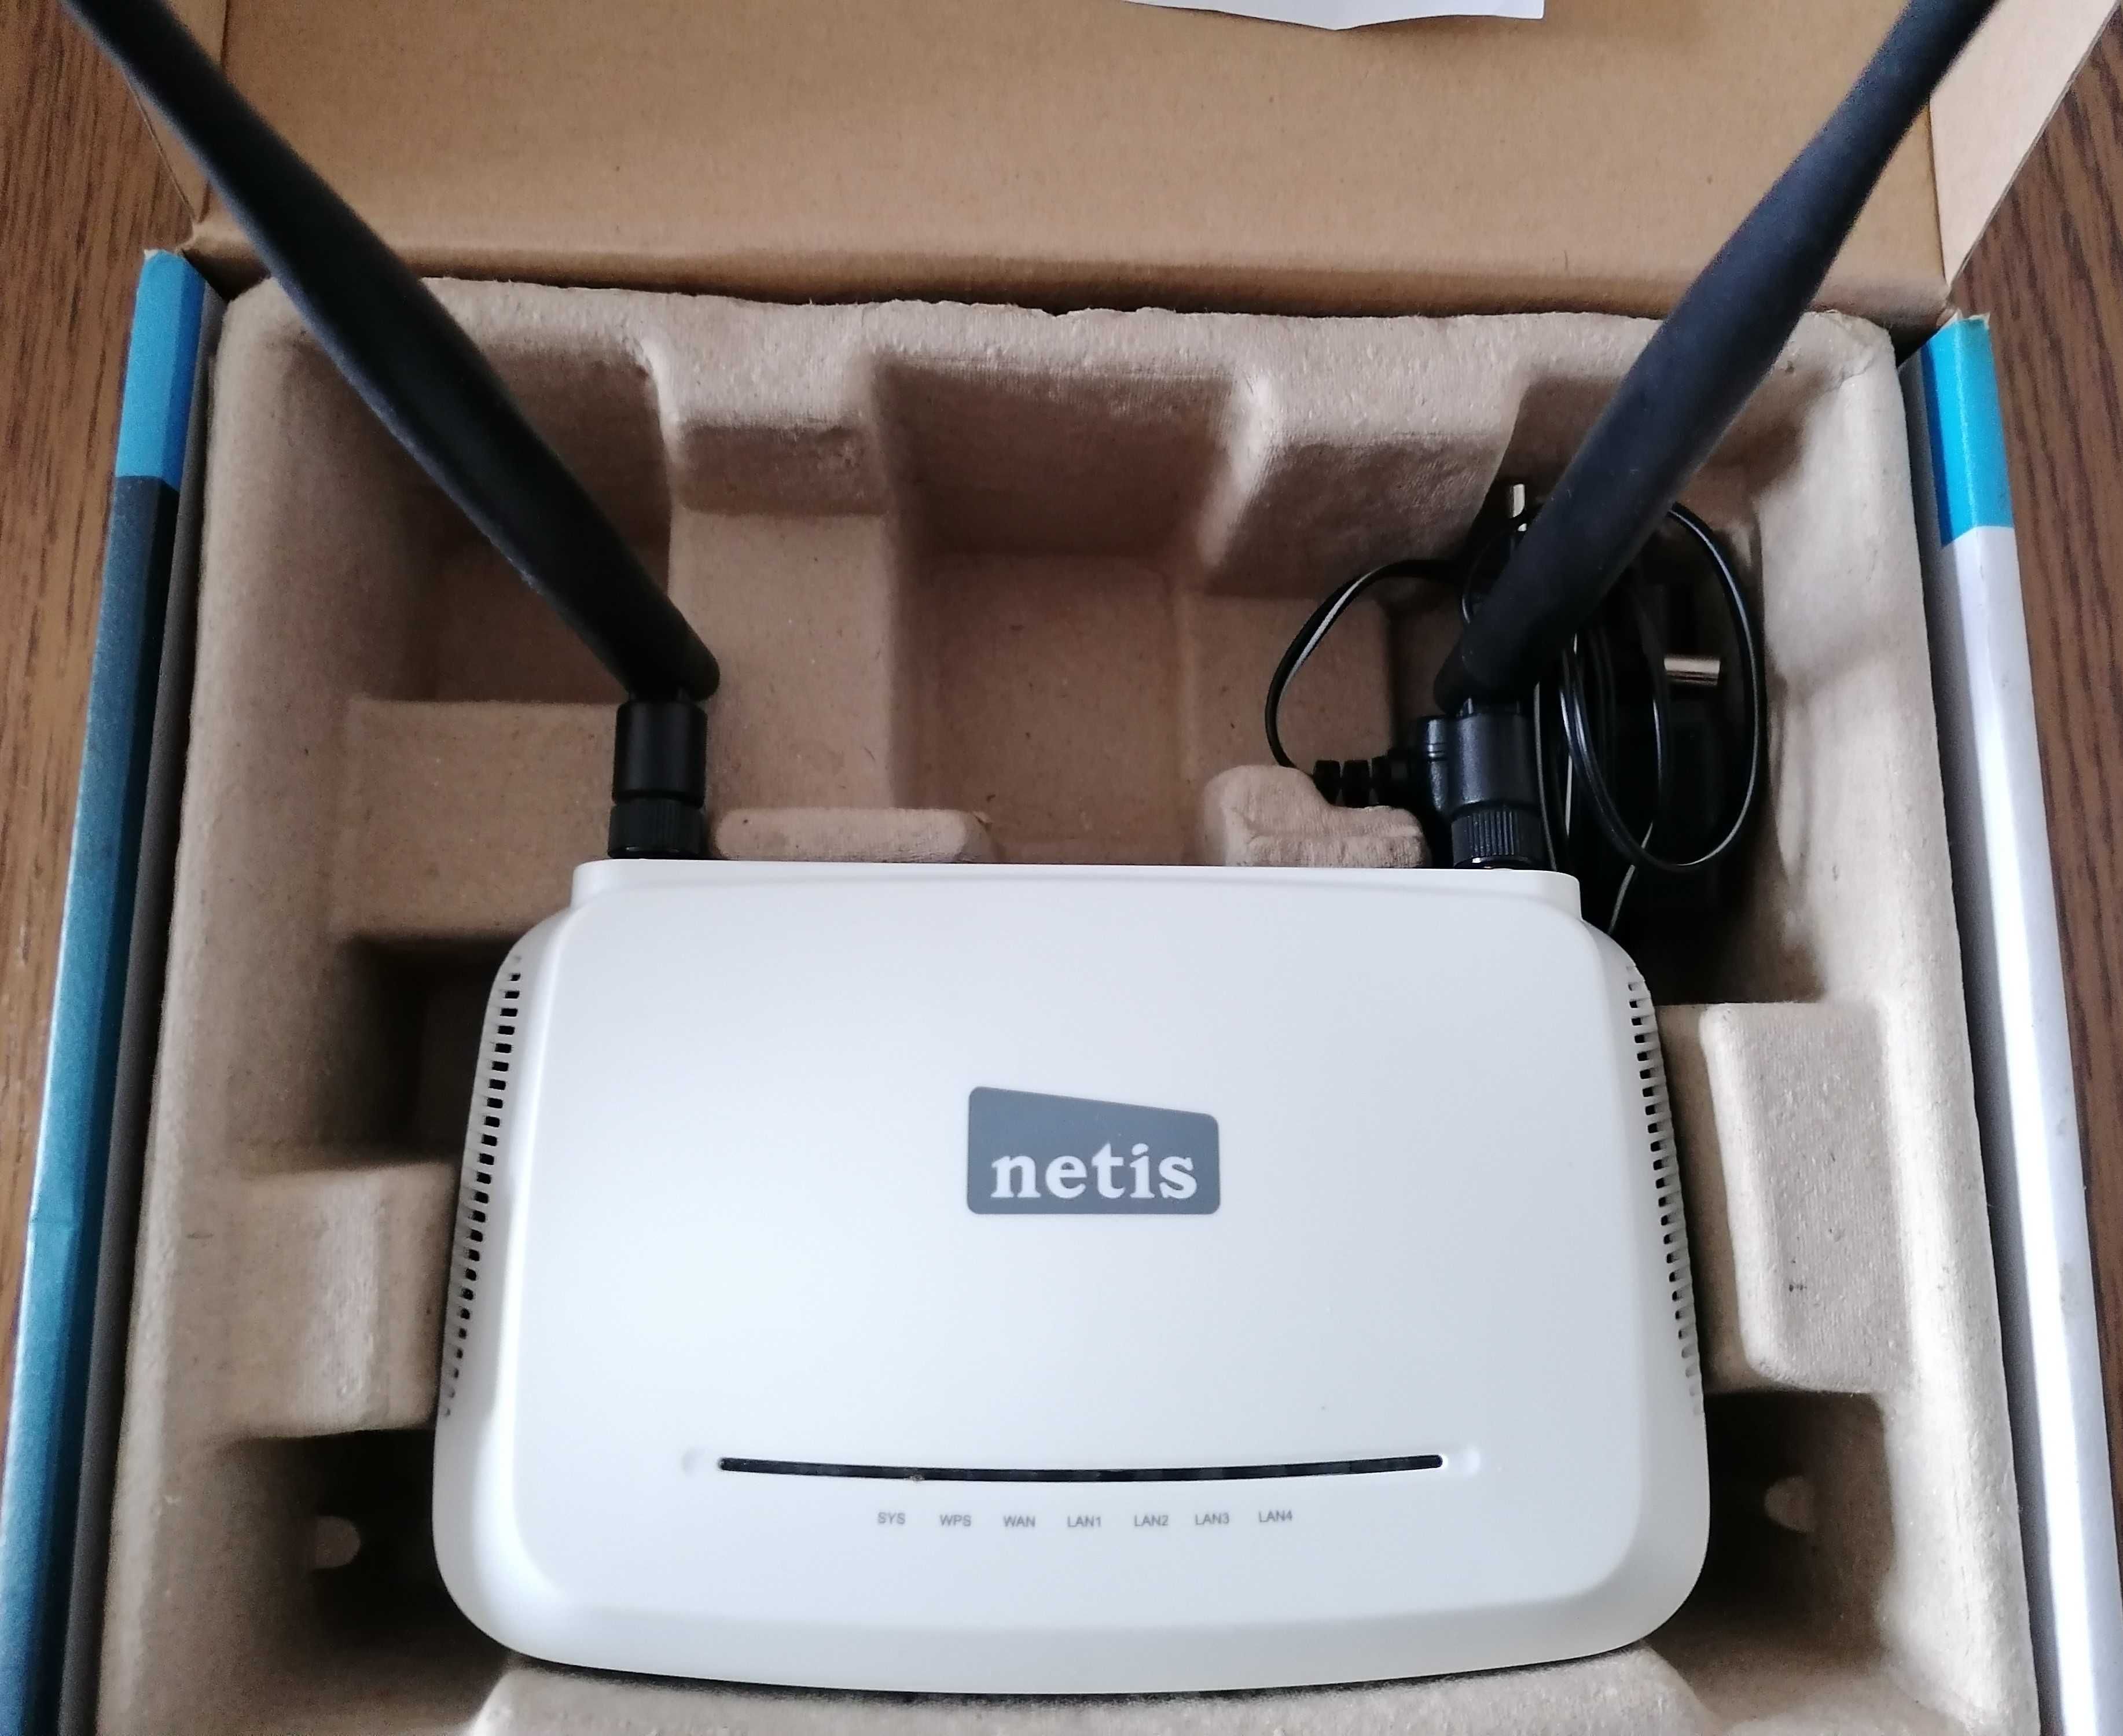 Router Netis WF2419D 300Mbps